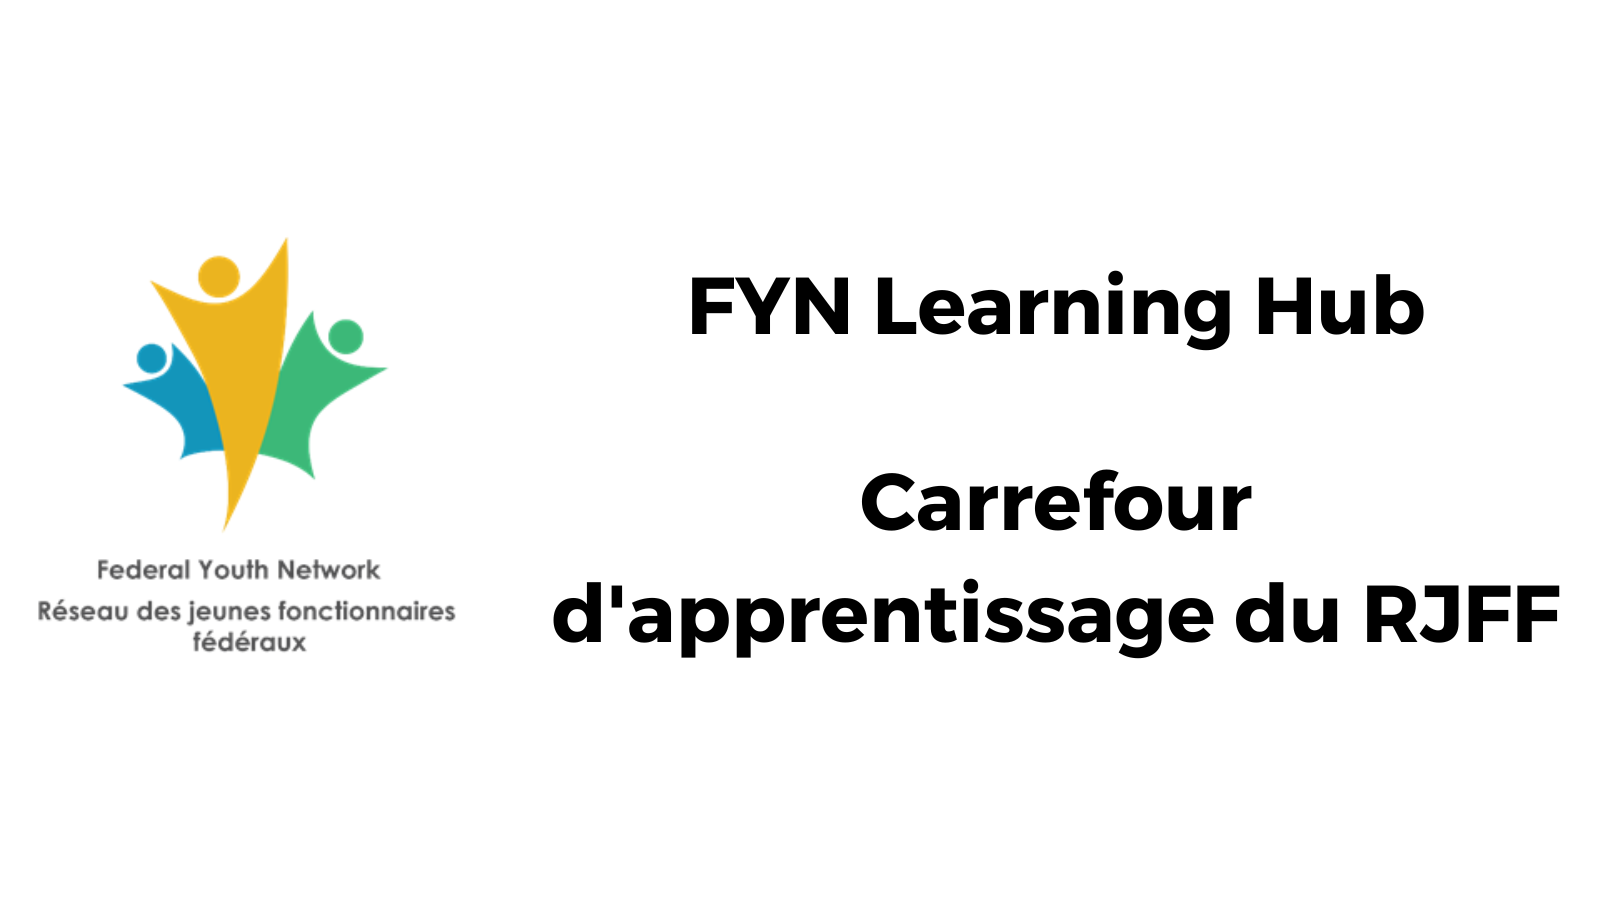 FYN Learning Hub / Carrefour d'apprentissage du RJFF